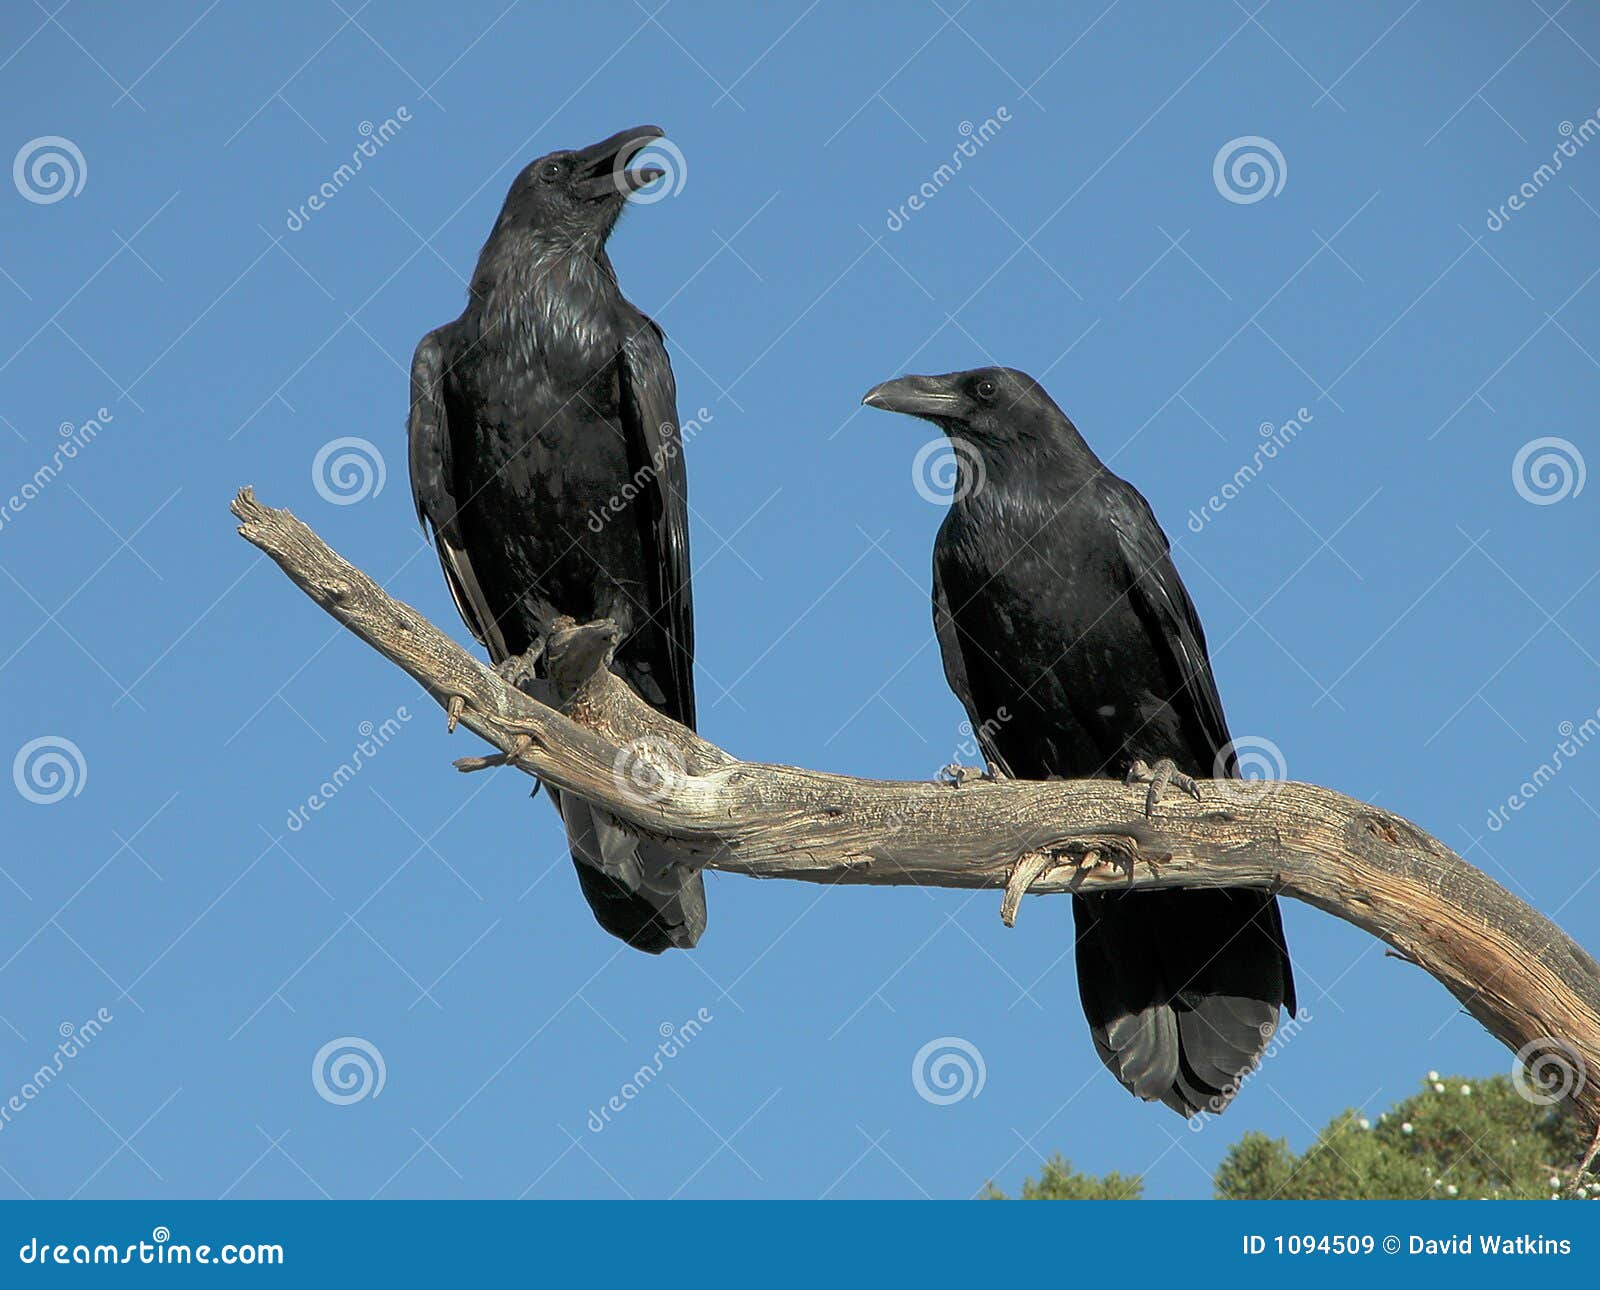 a pair of ravens